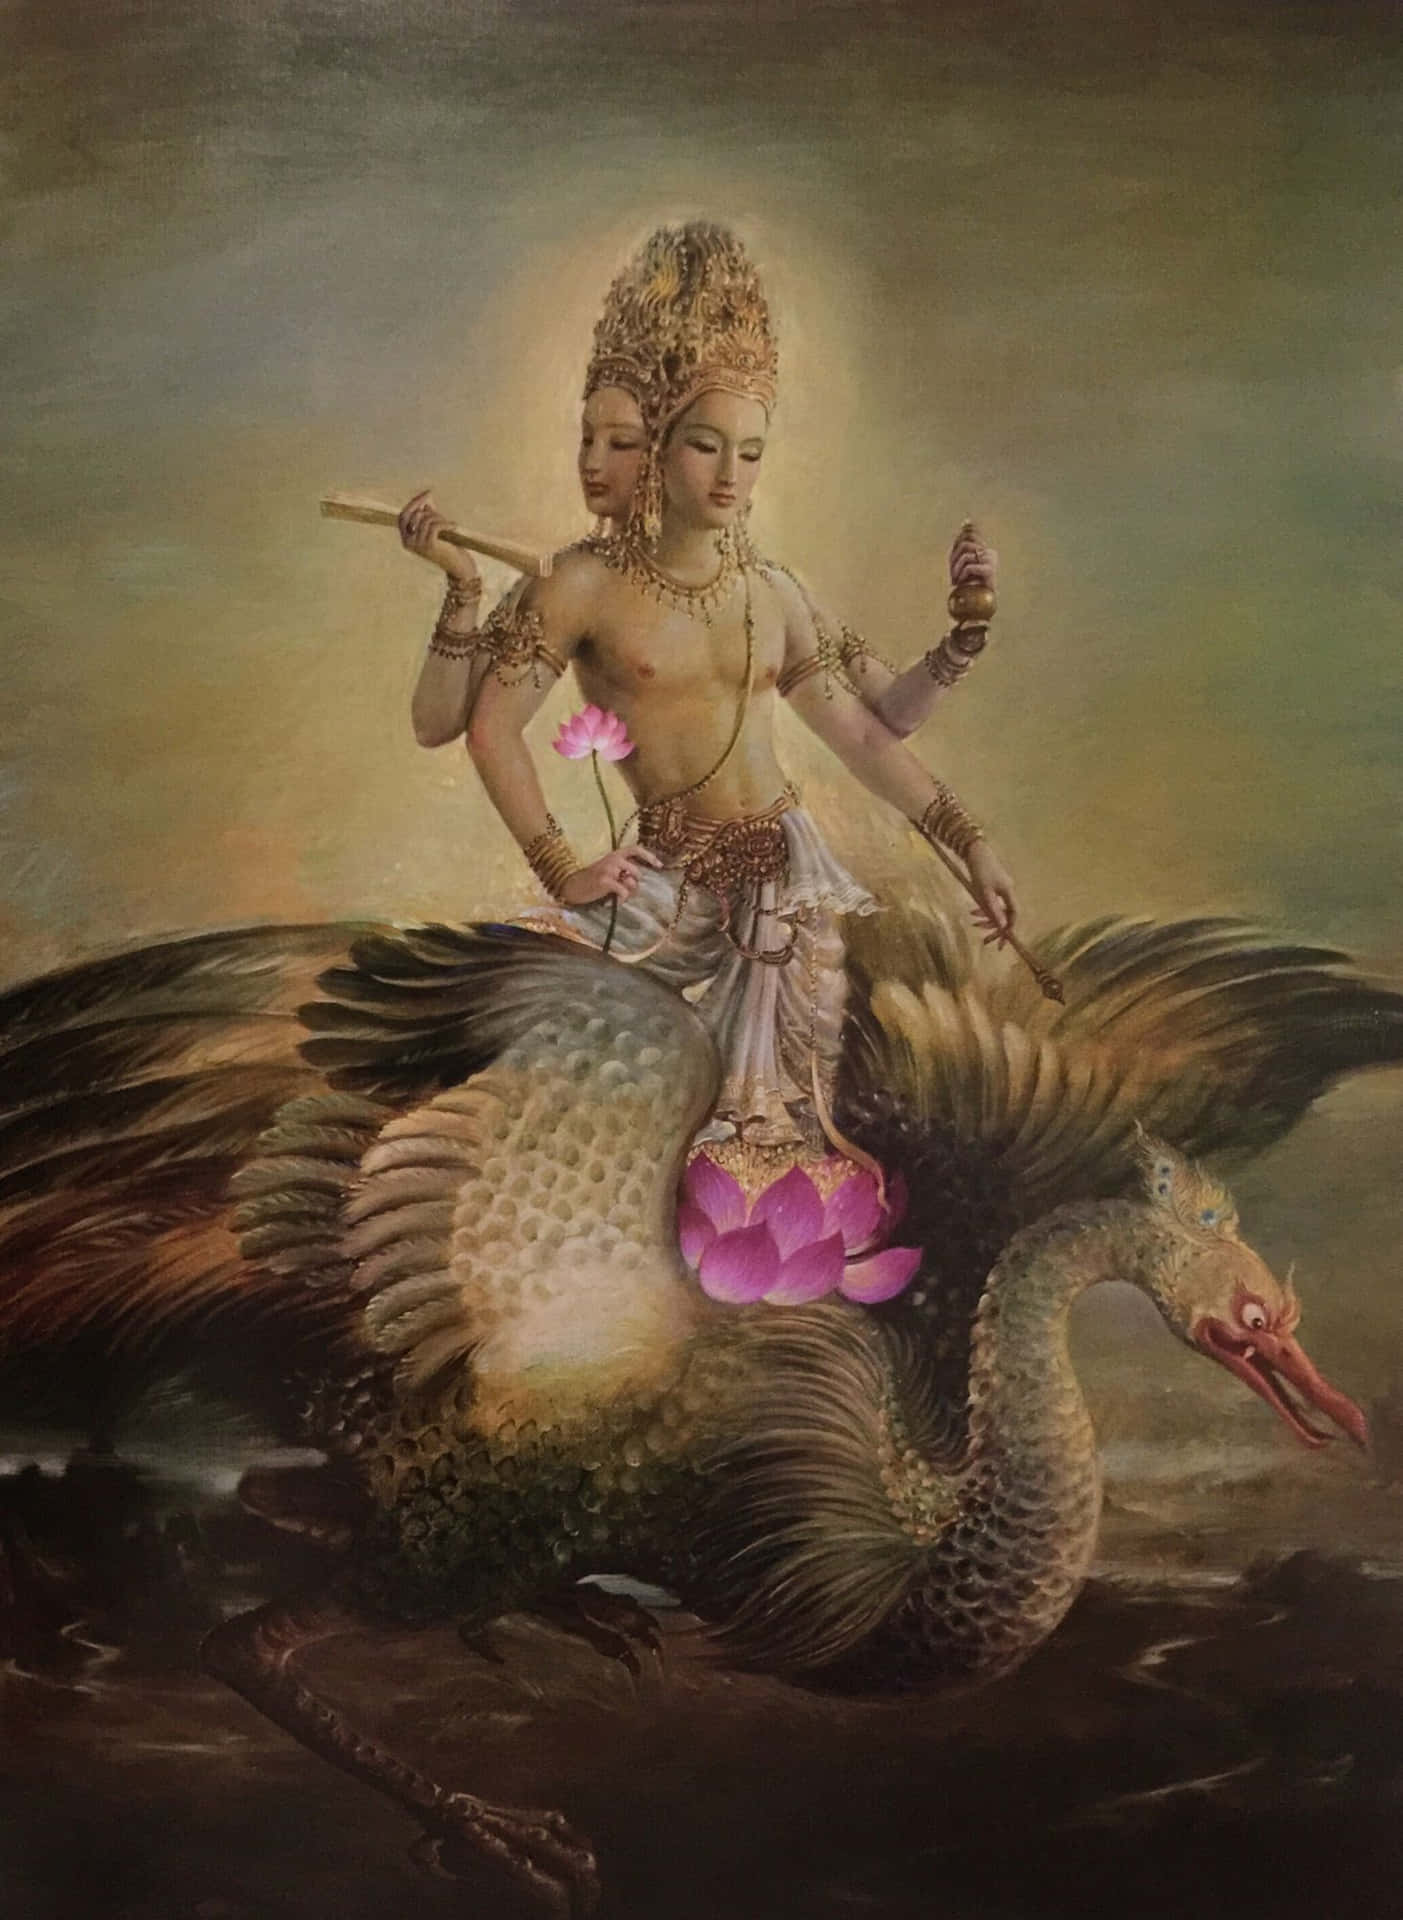 Lord Shiva, The Supreme God of Hindus